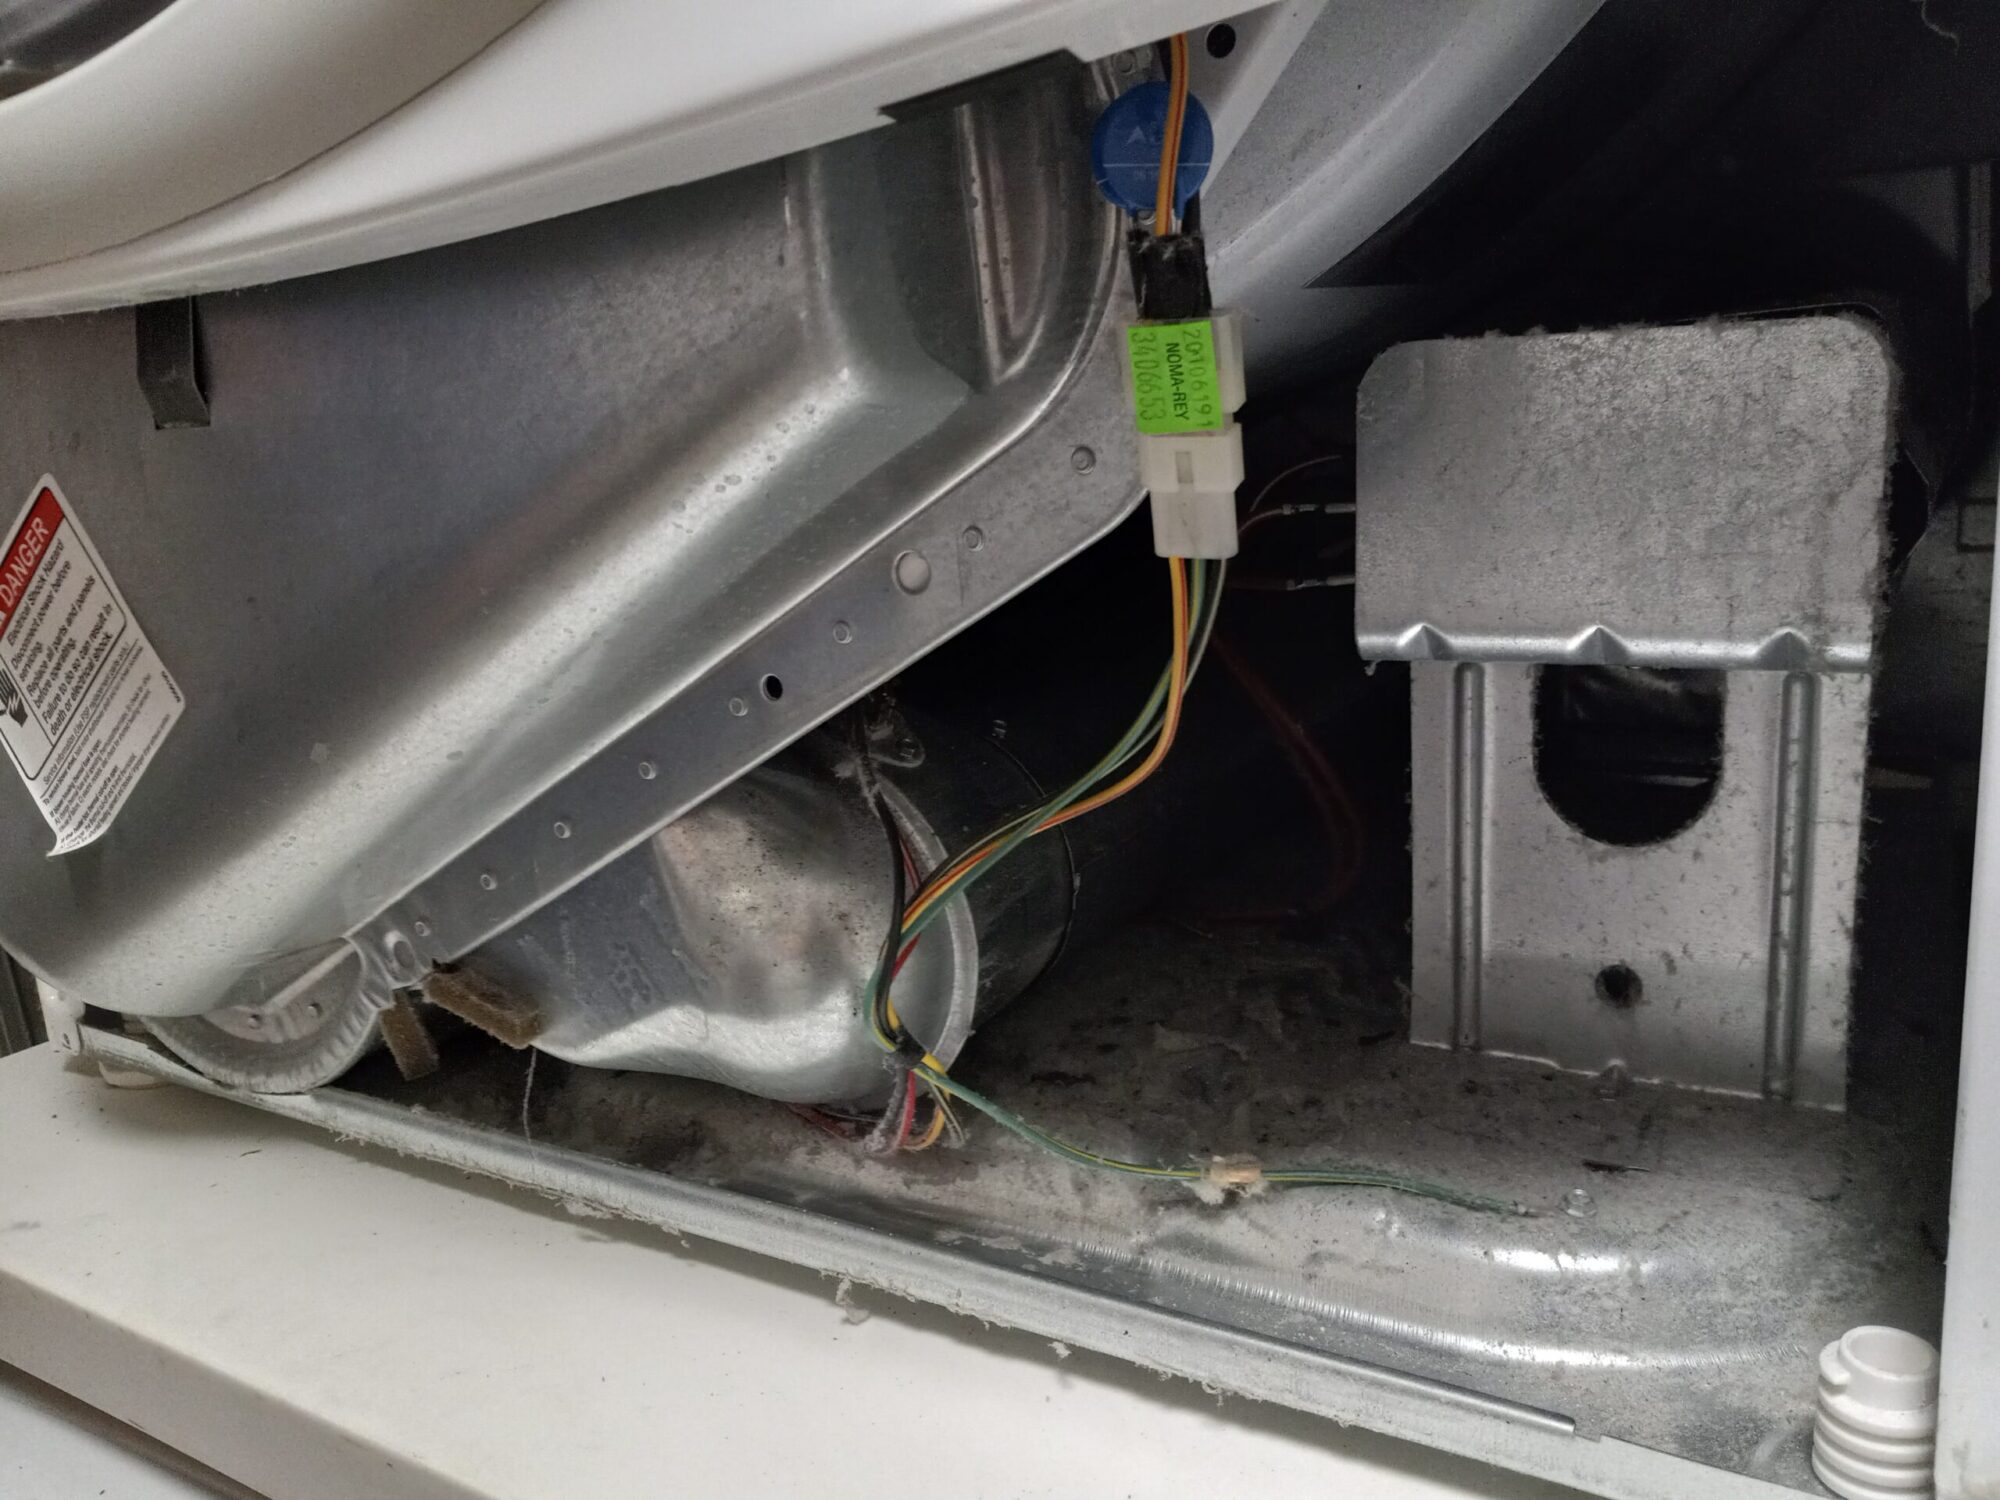 appliance repair dryer repair dryer not tumbling nw 29th ave ocala fl 34475